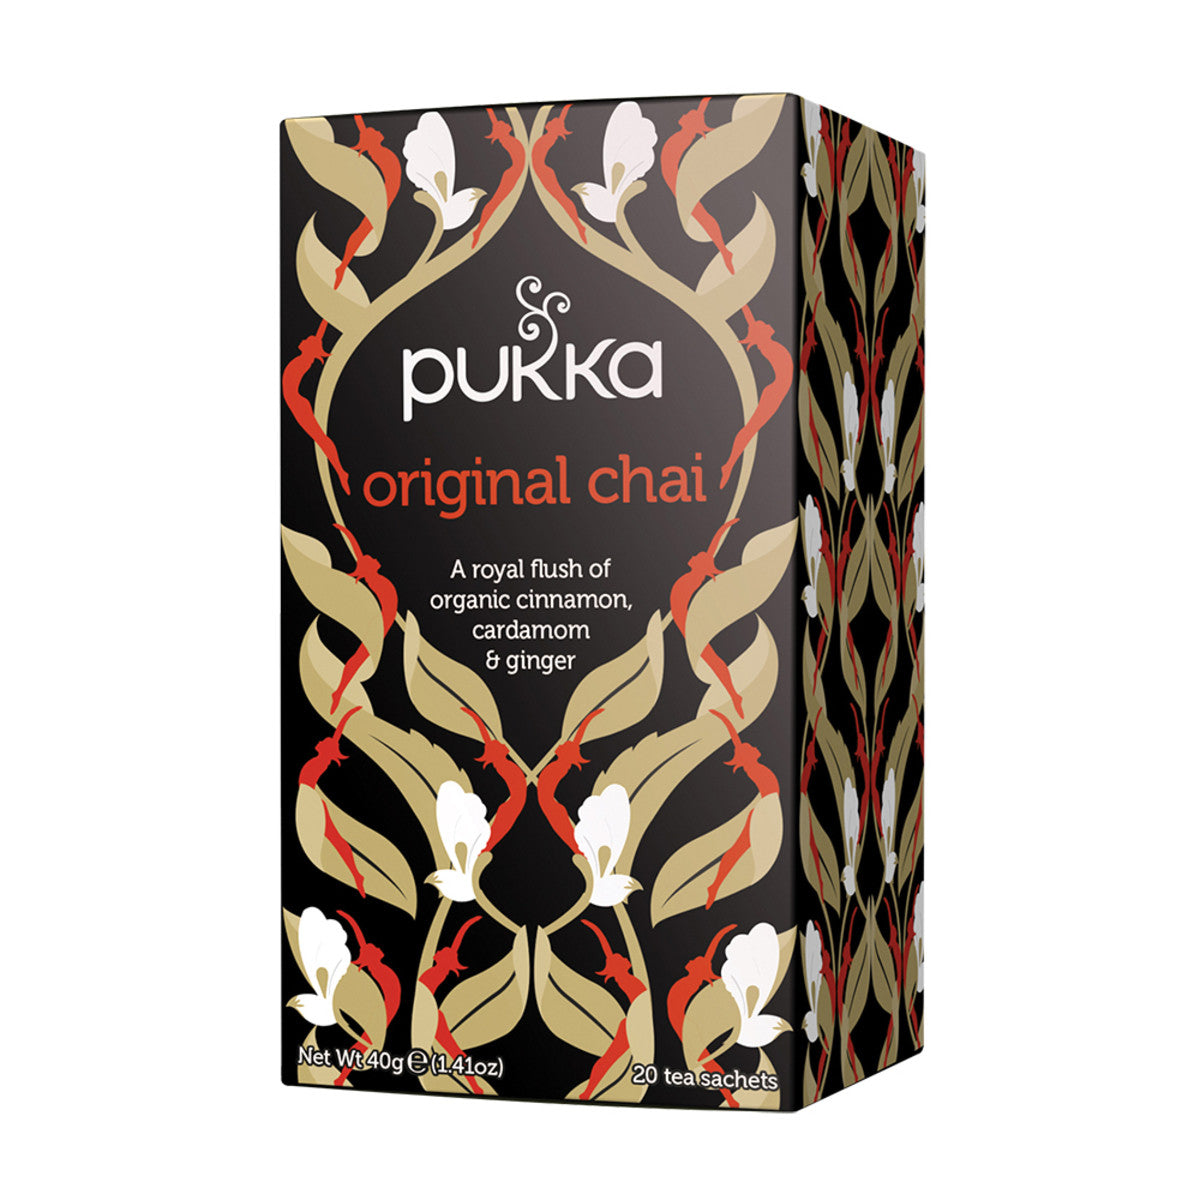 Pukka Tea - Original Chai